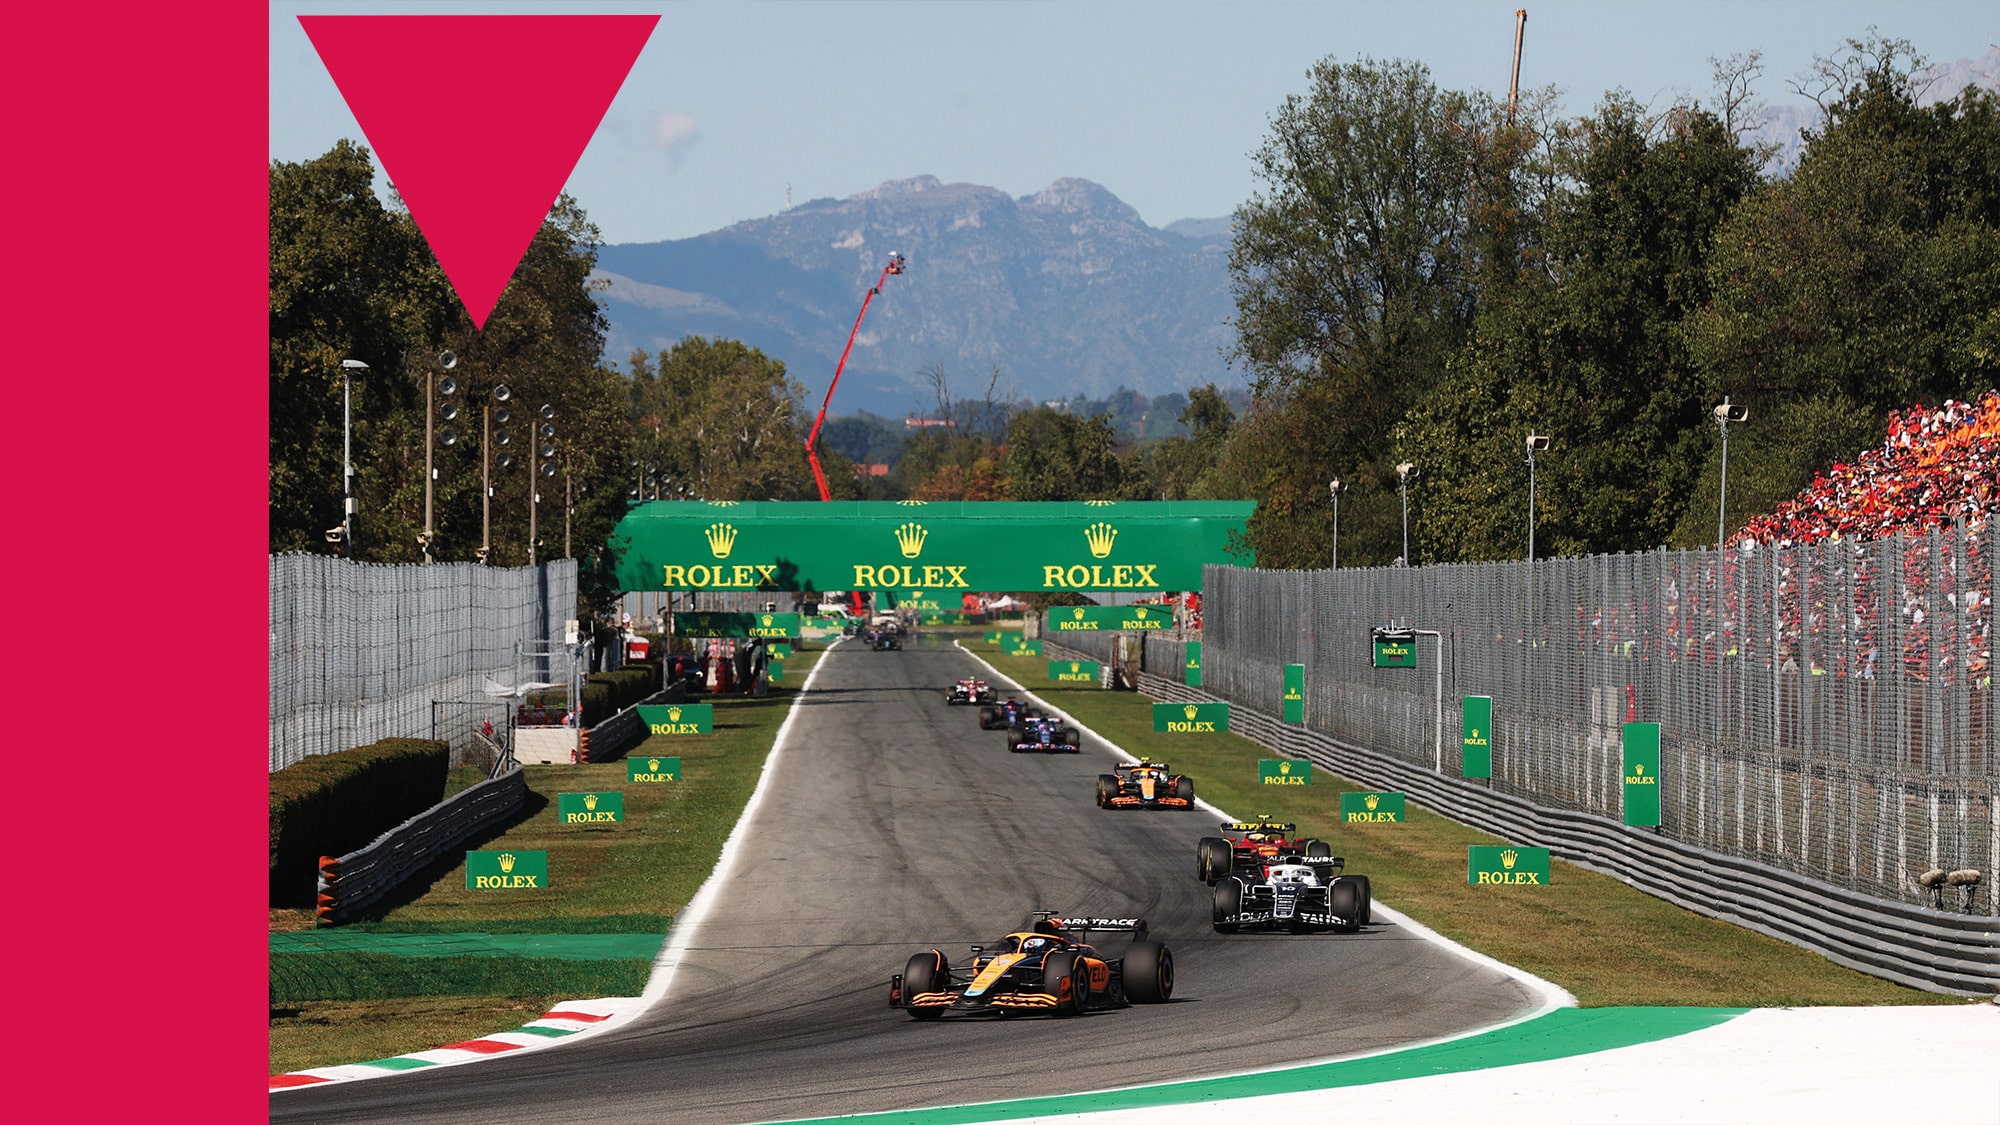 Daniel Ricciardo leads a line oif cars at the 2022 Italian Grand Prix